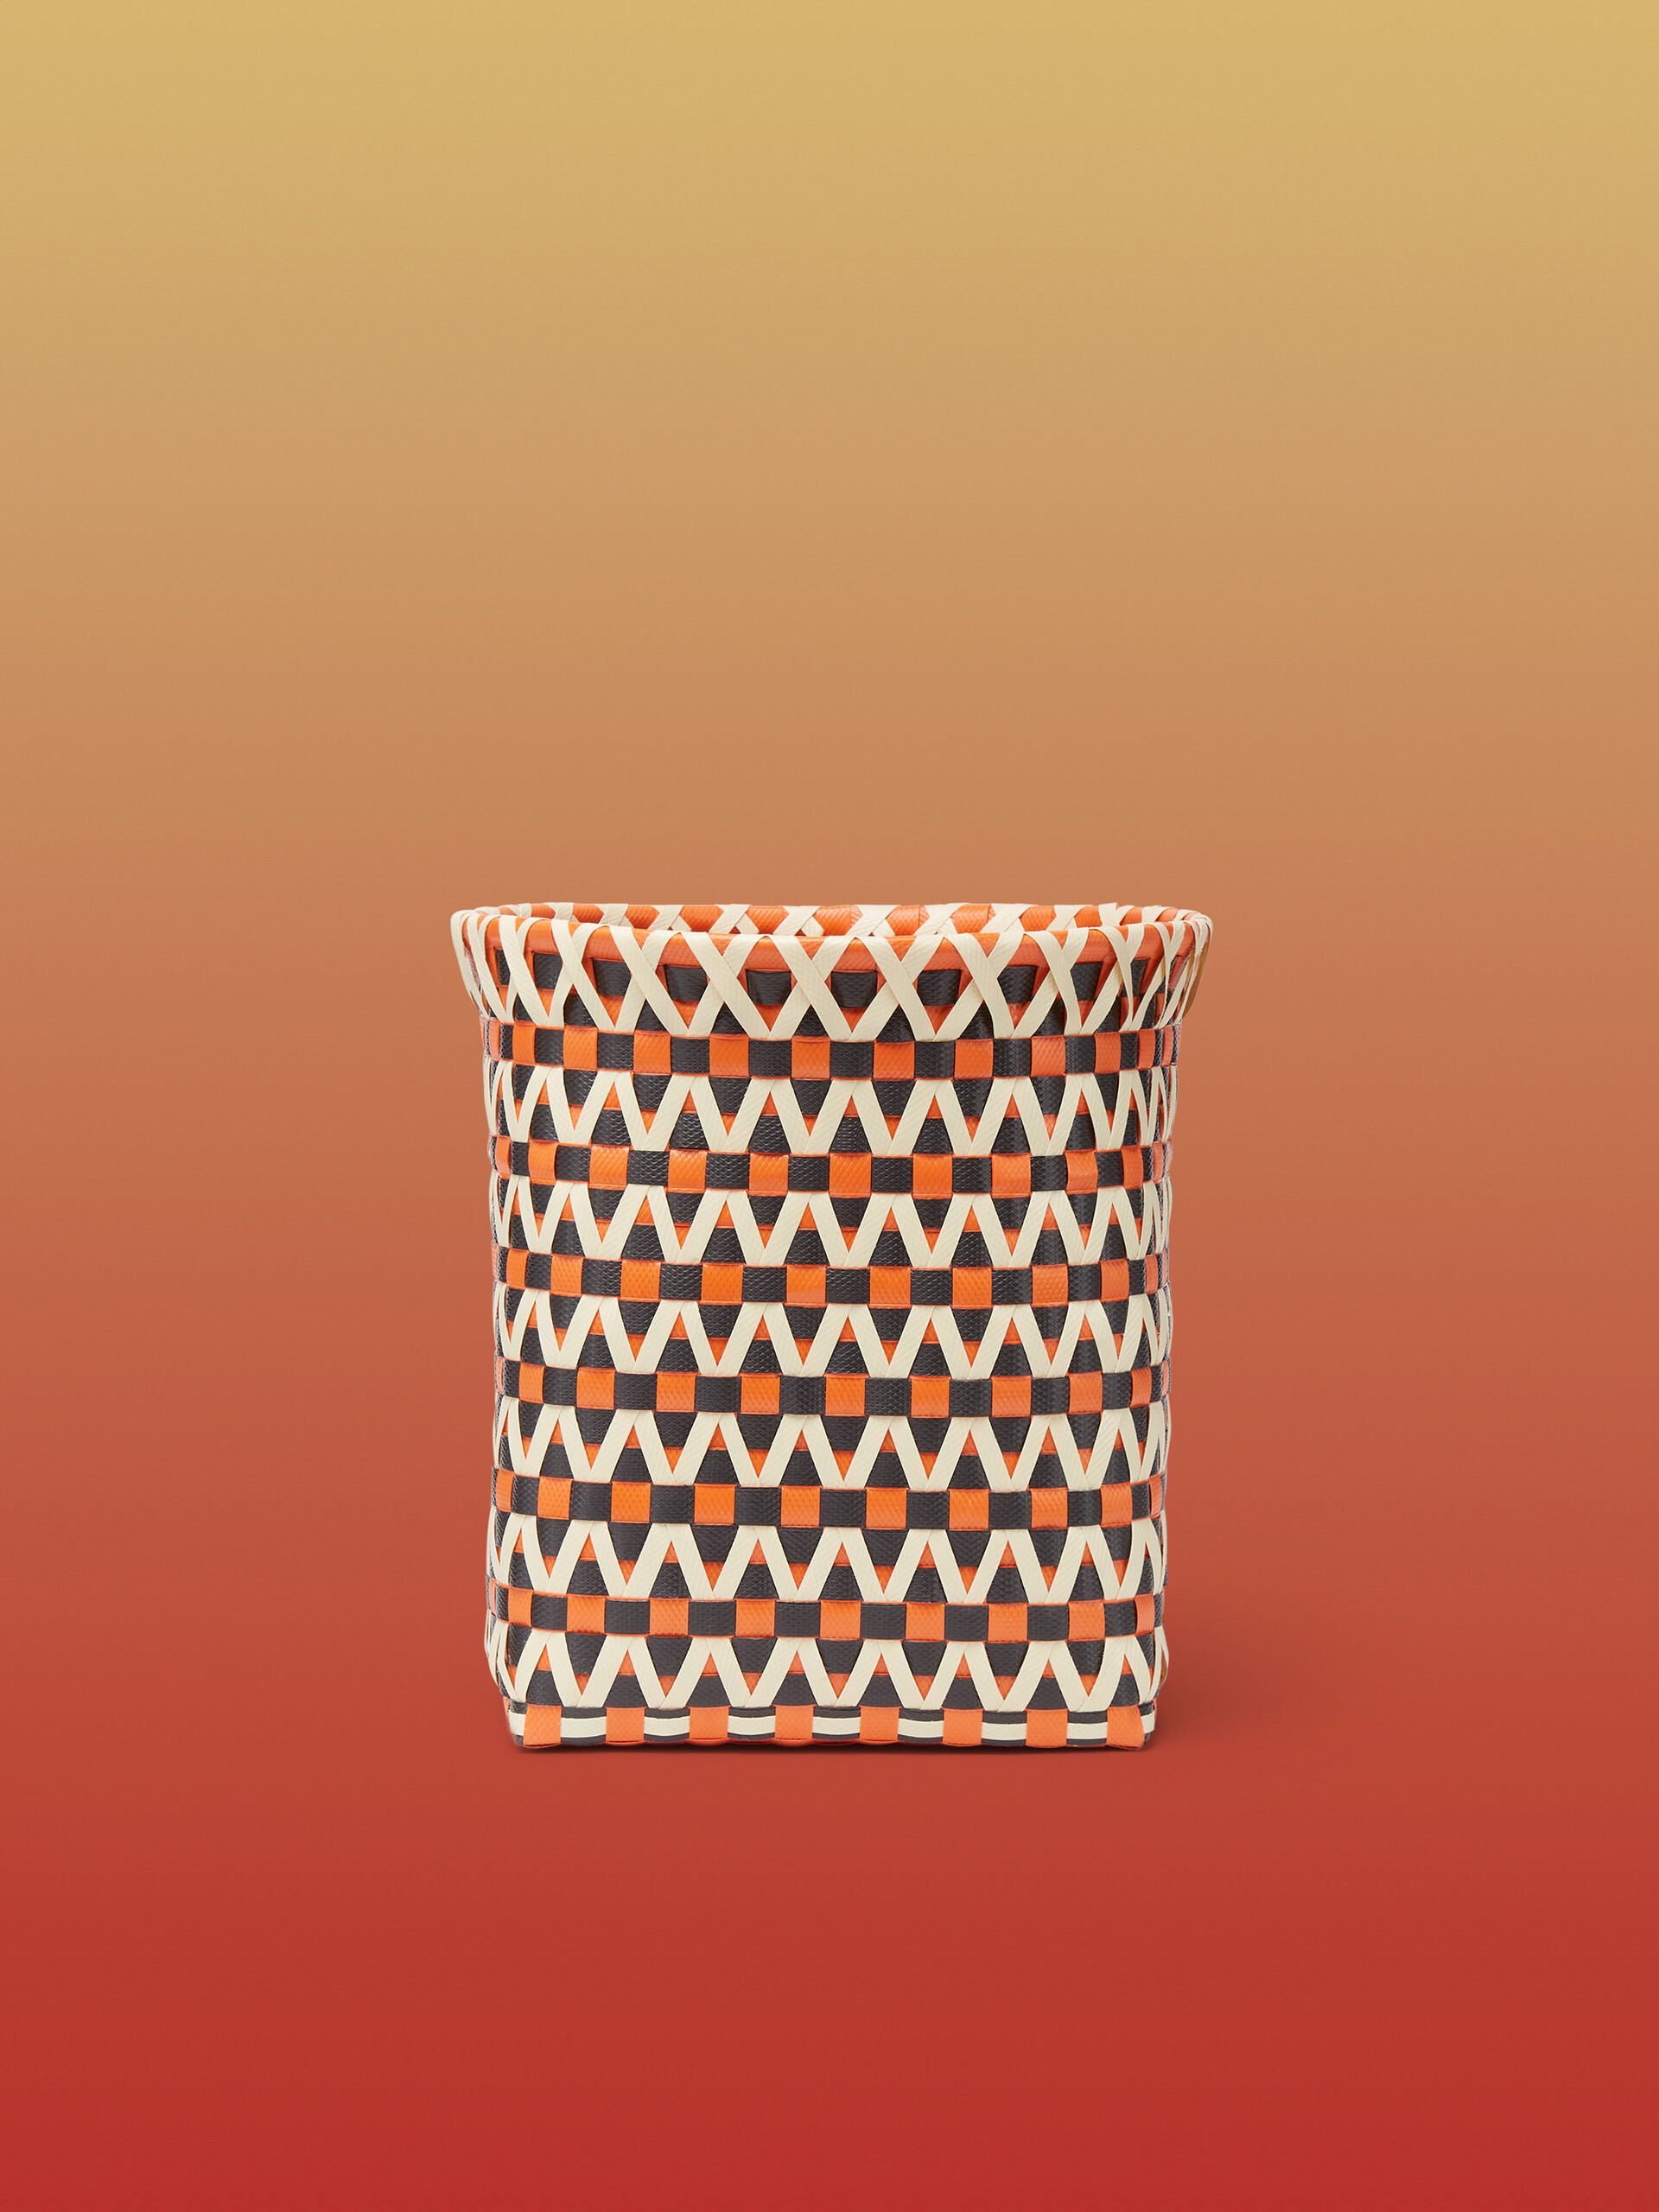 MARNI MARKET basket in orange black and white woven PVC - Home Accessories - Image 1